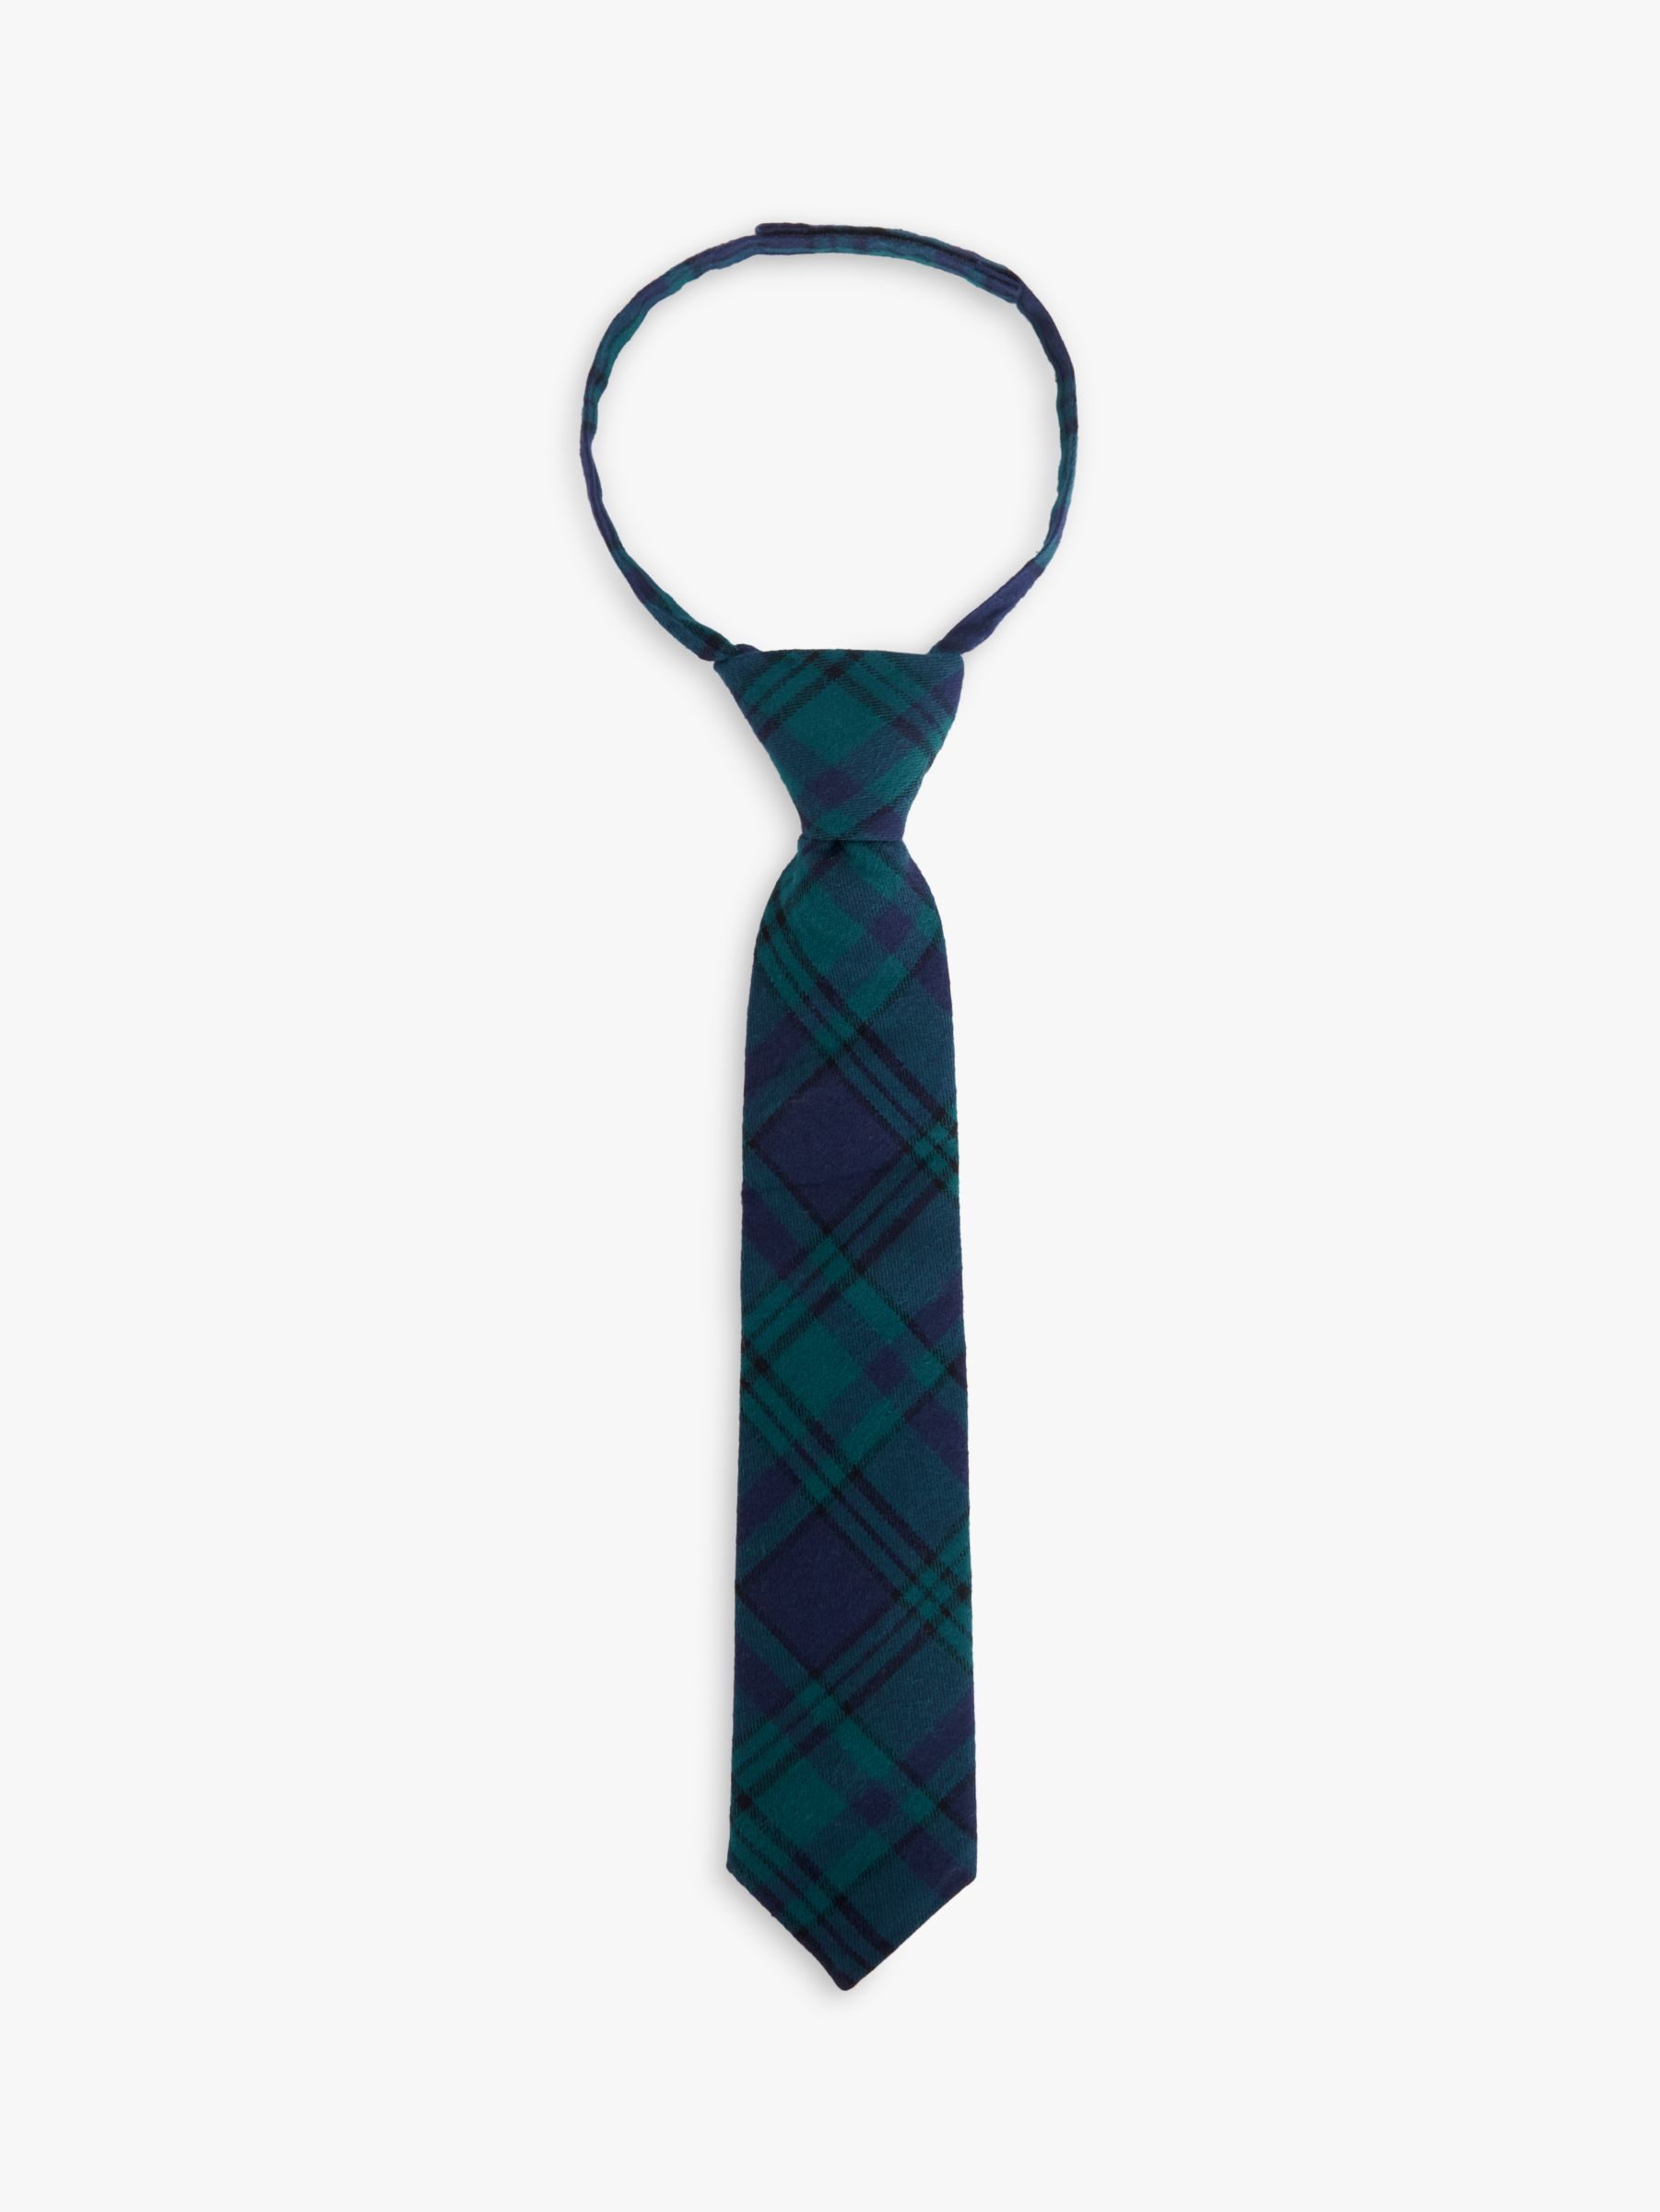 John Lewis Kids' Tartan Tie, Green/Blue, S-M